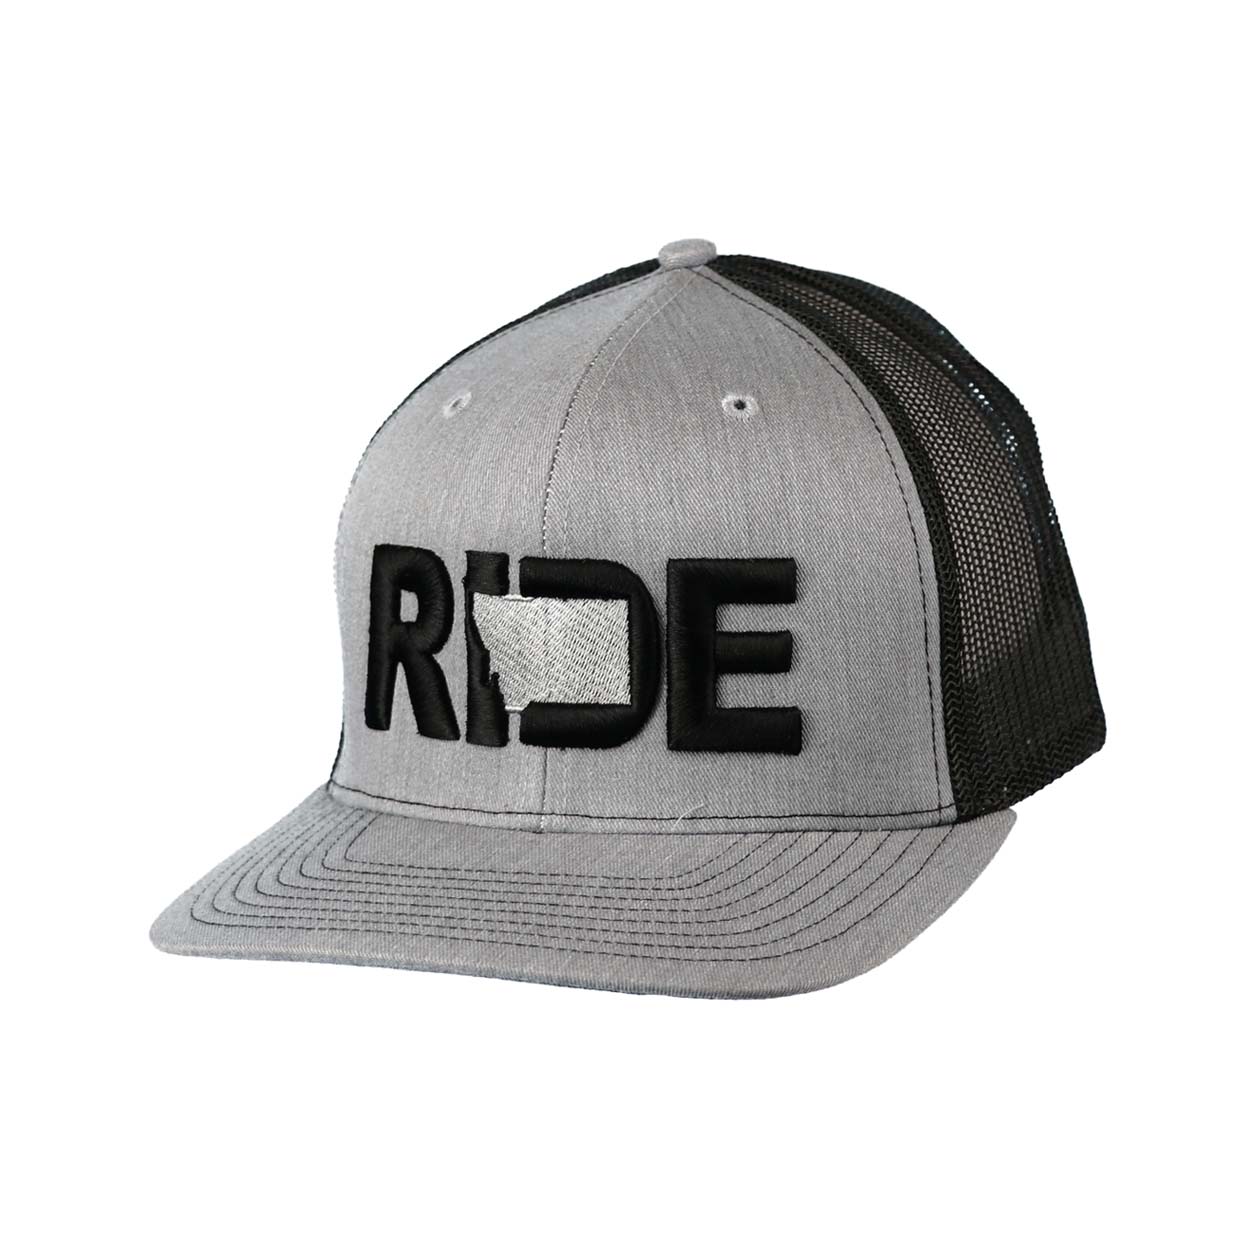 Ride Montana Classic Embroidered Snapback Trucker Hat Heather Gray/Black